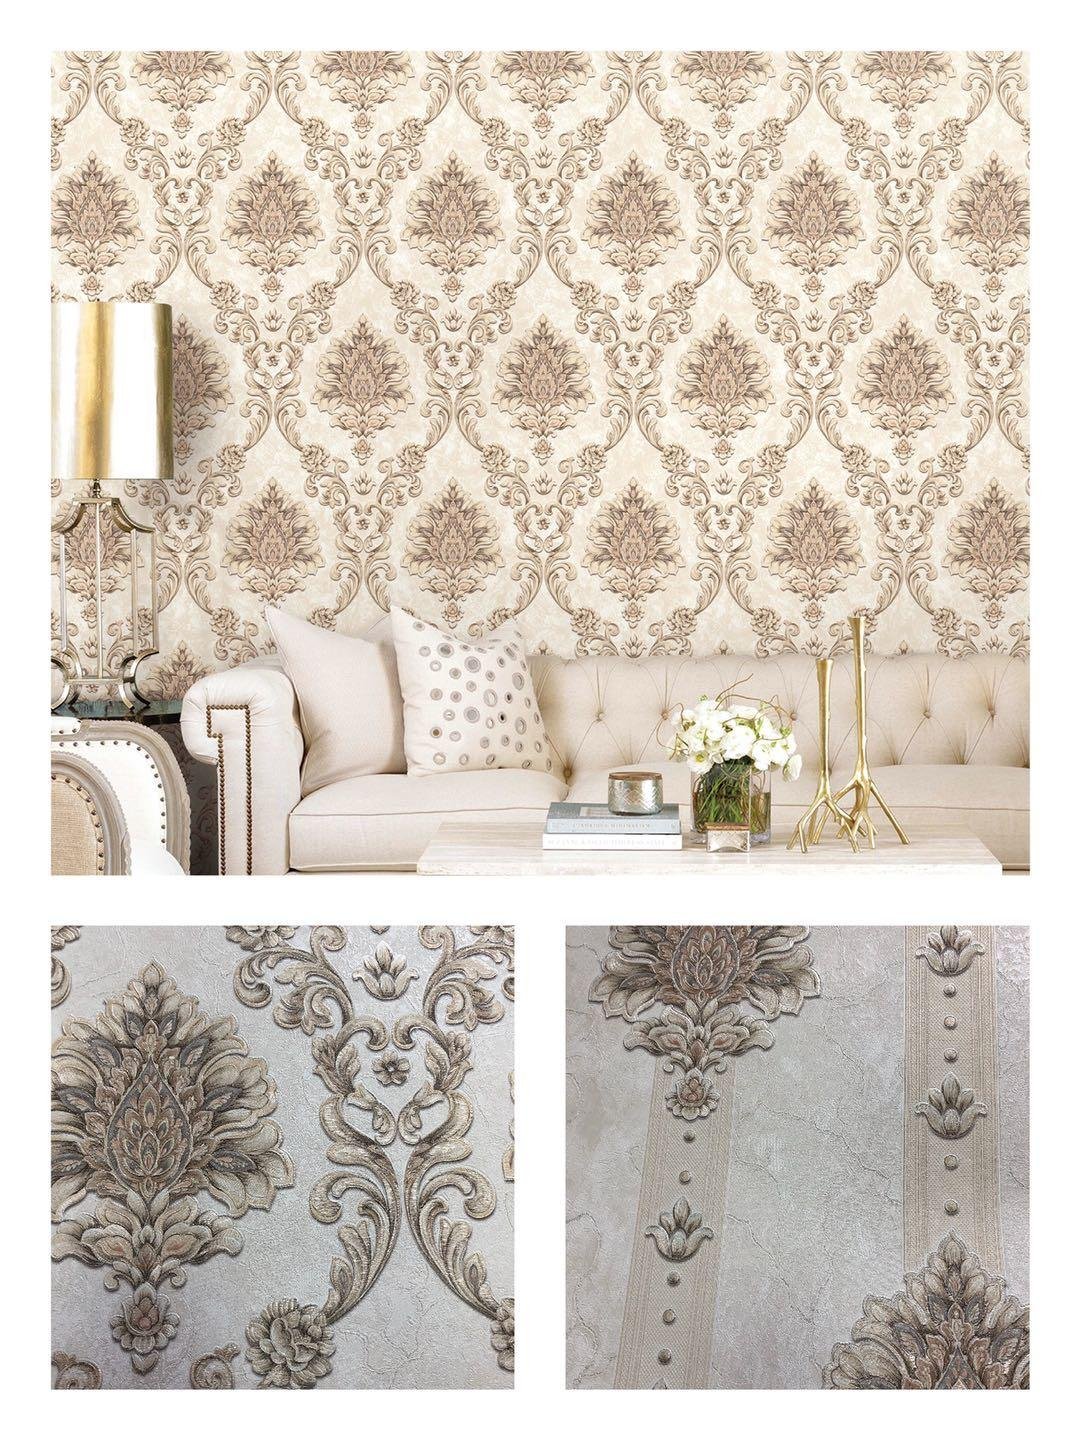 2020 pvc wallpaper wallcoving classic damask new design home decor